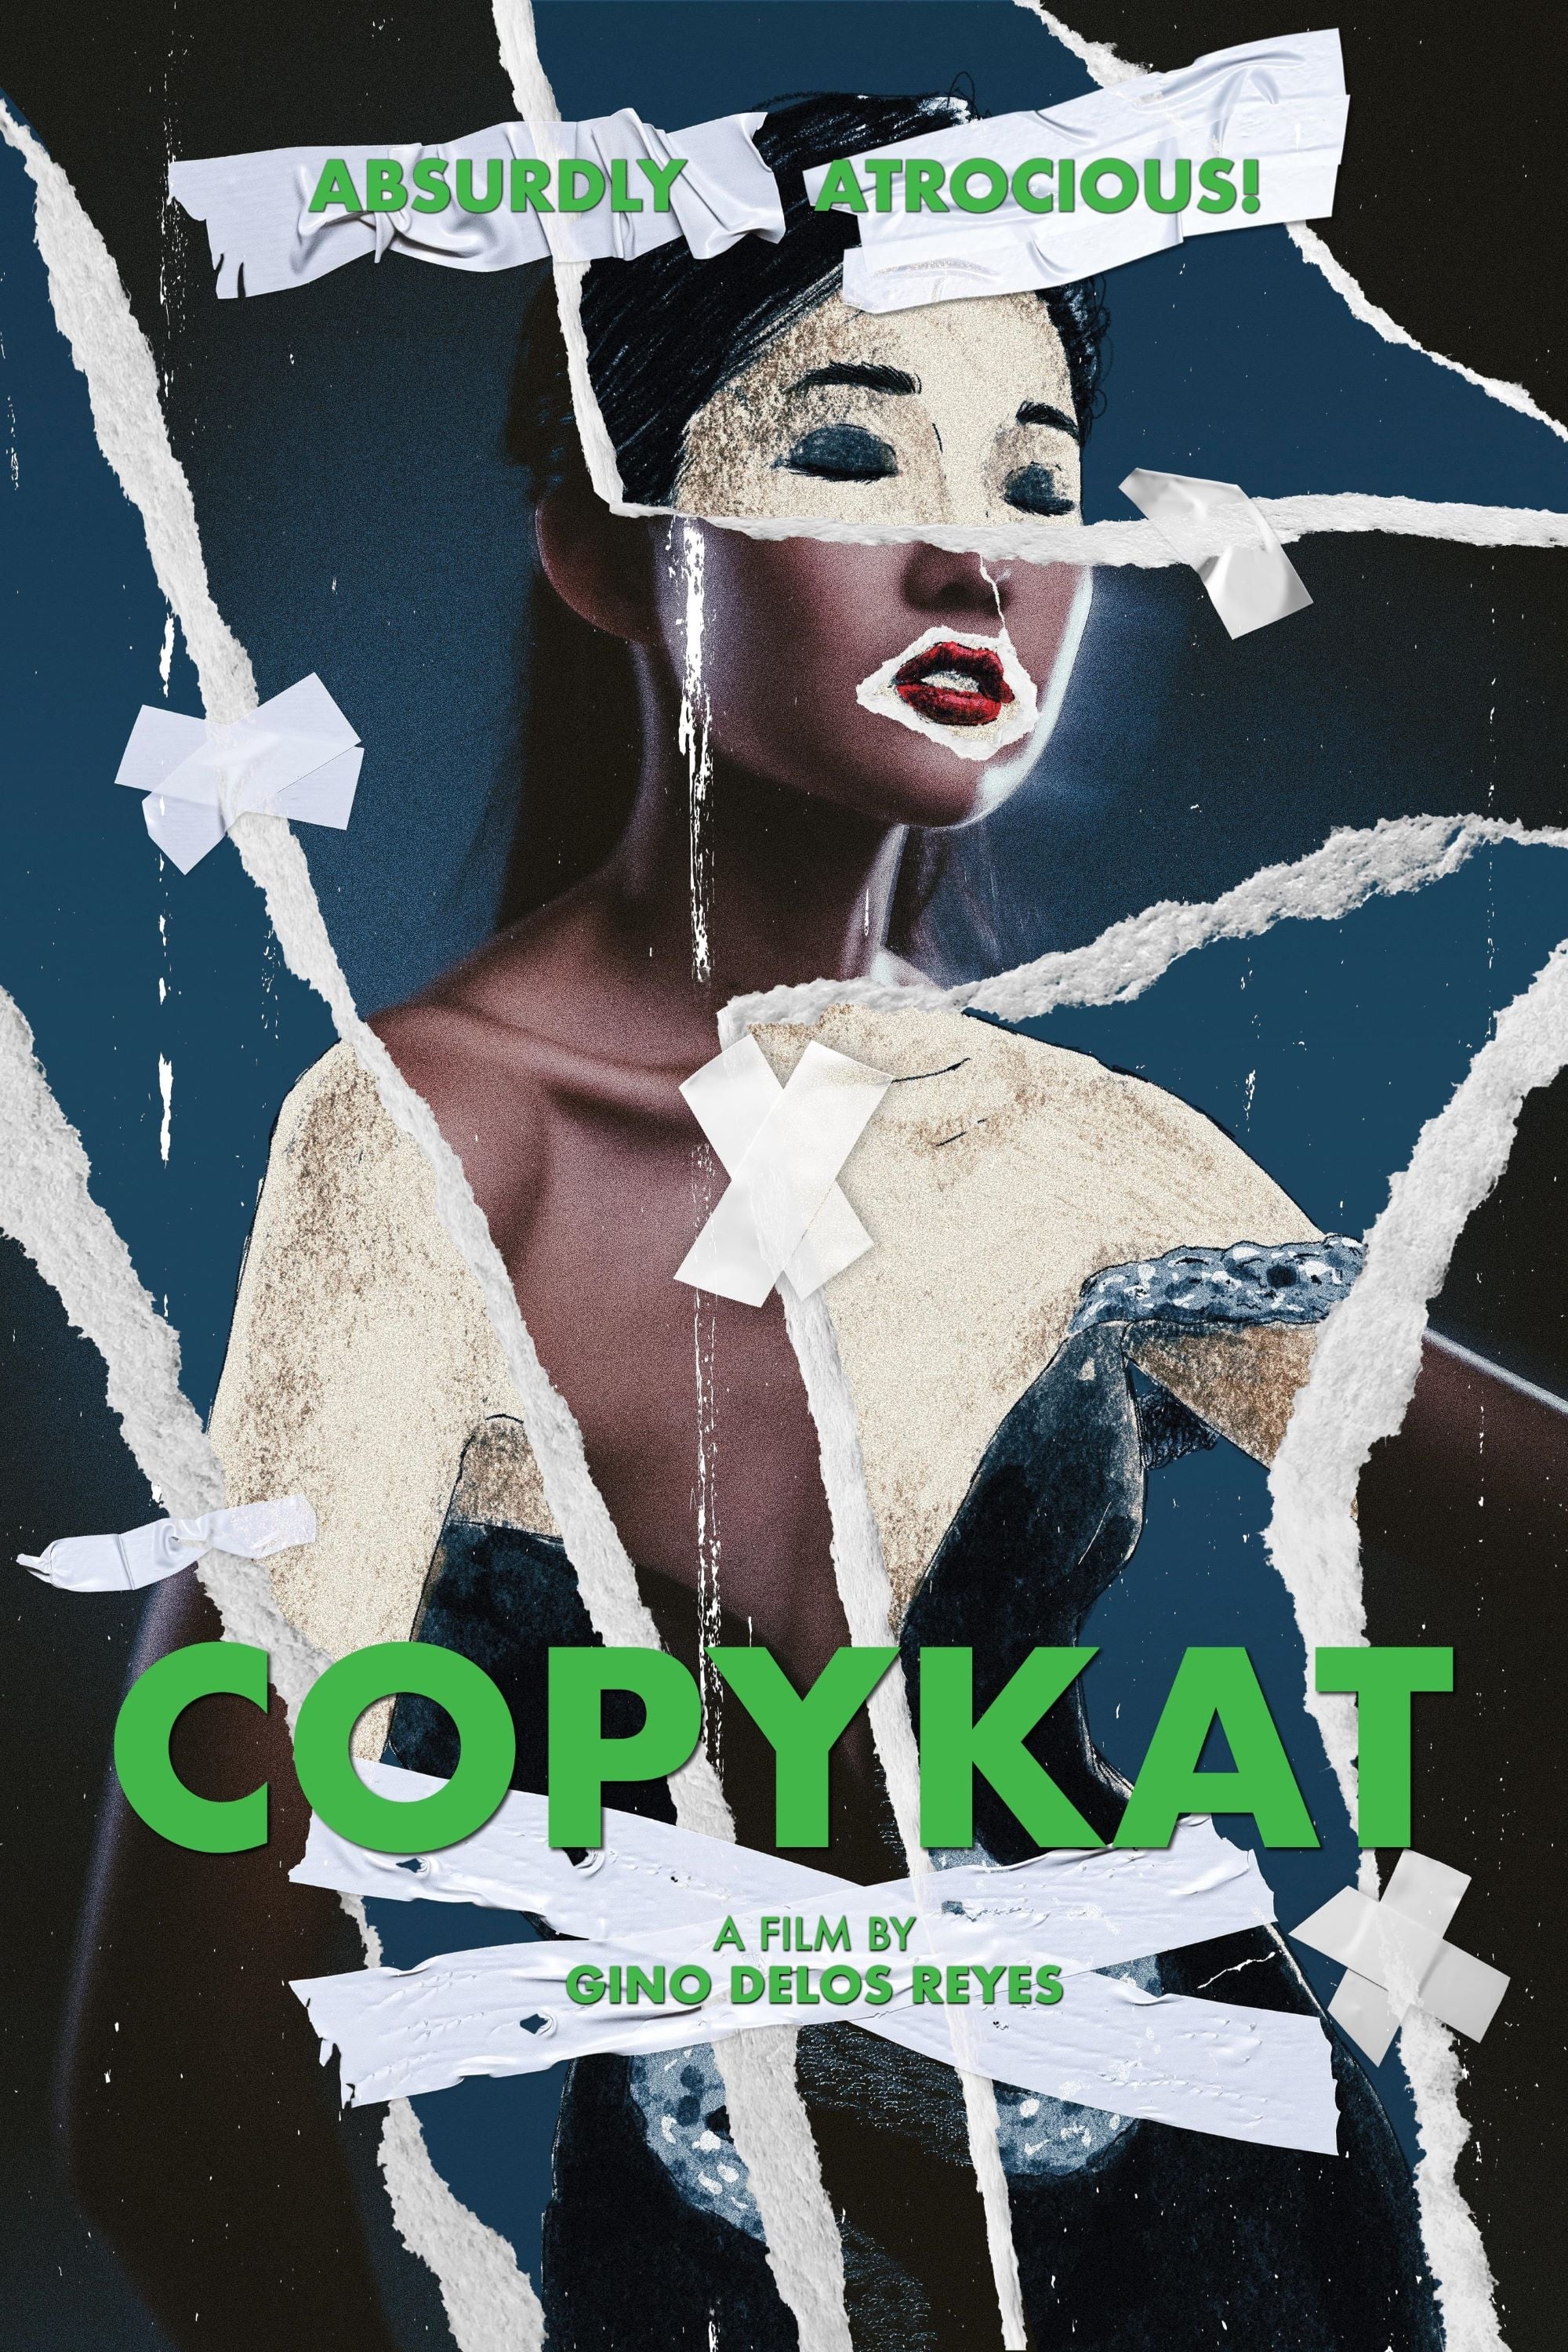 CopyKat